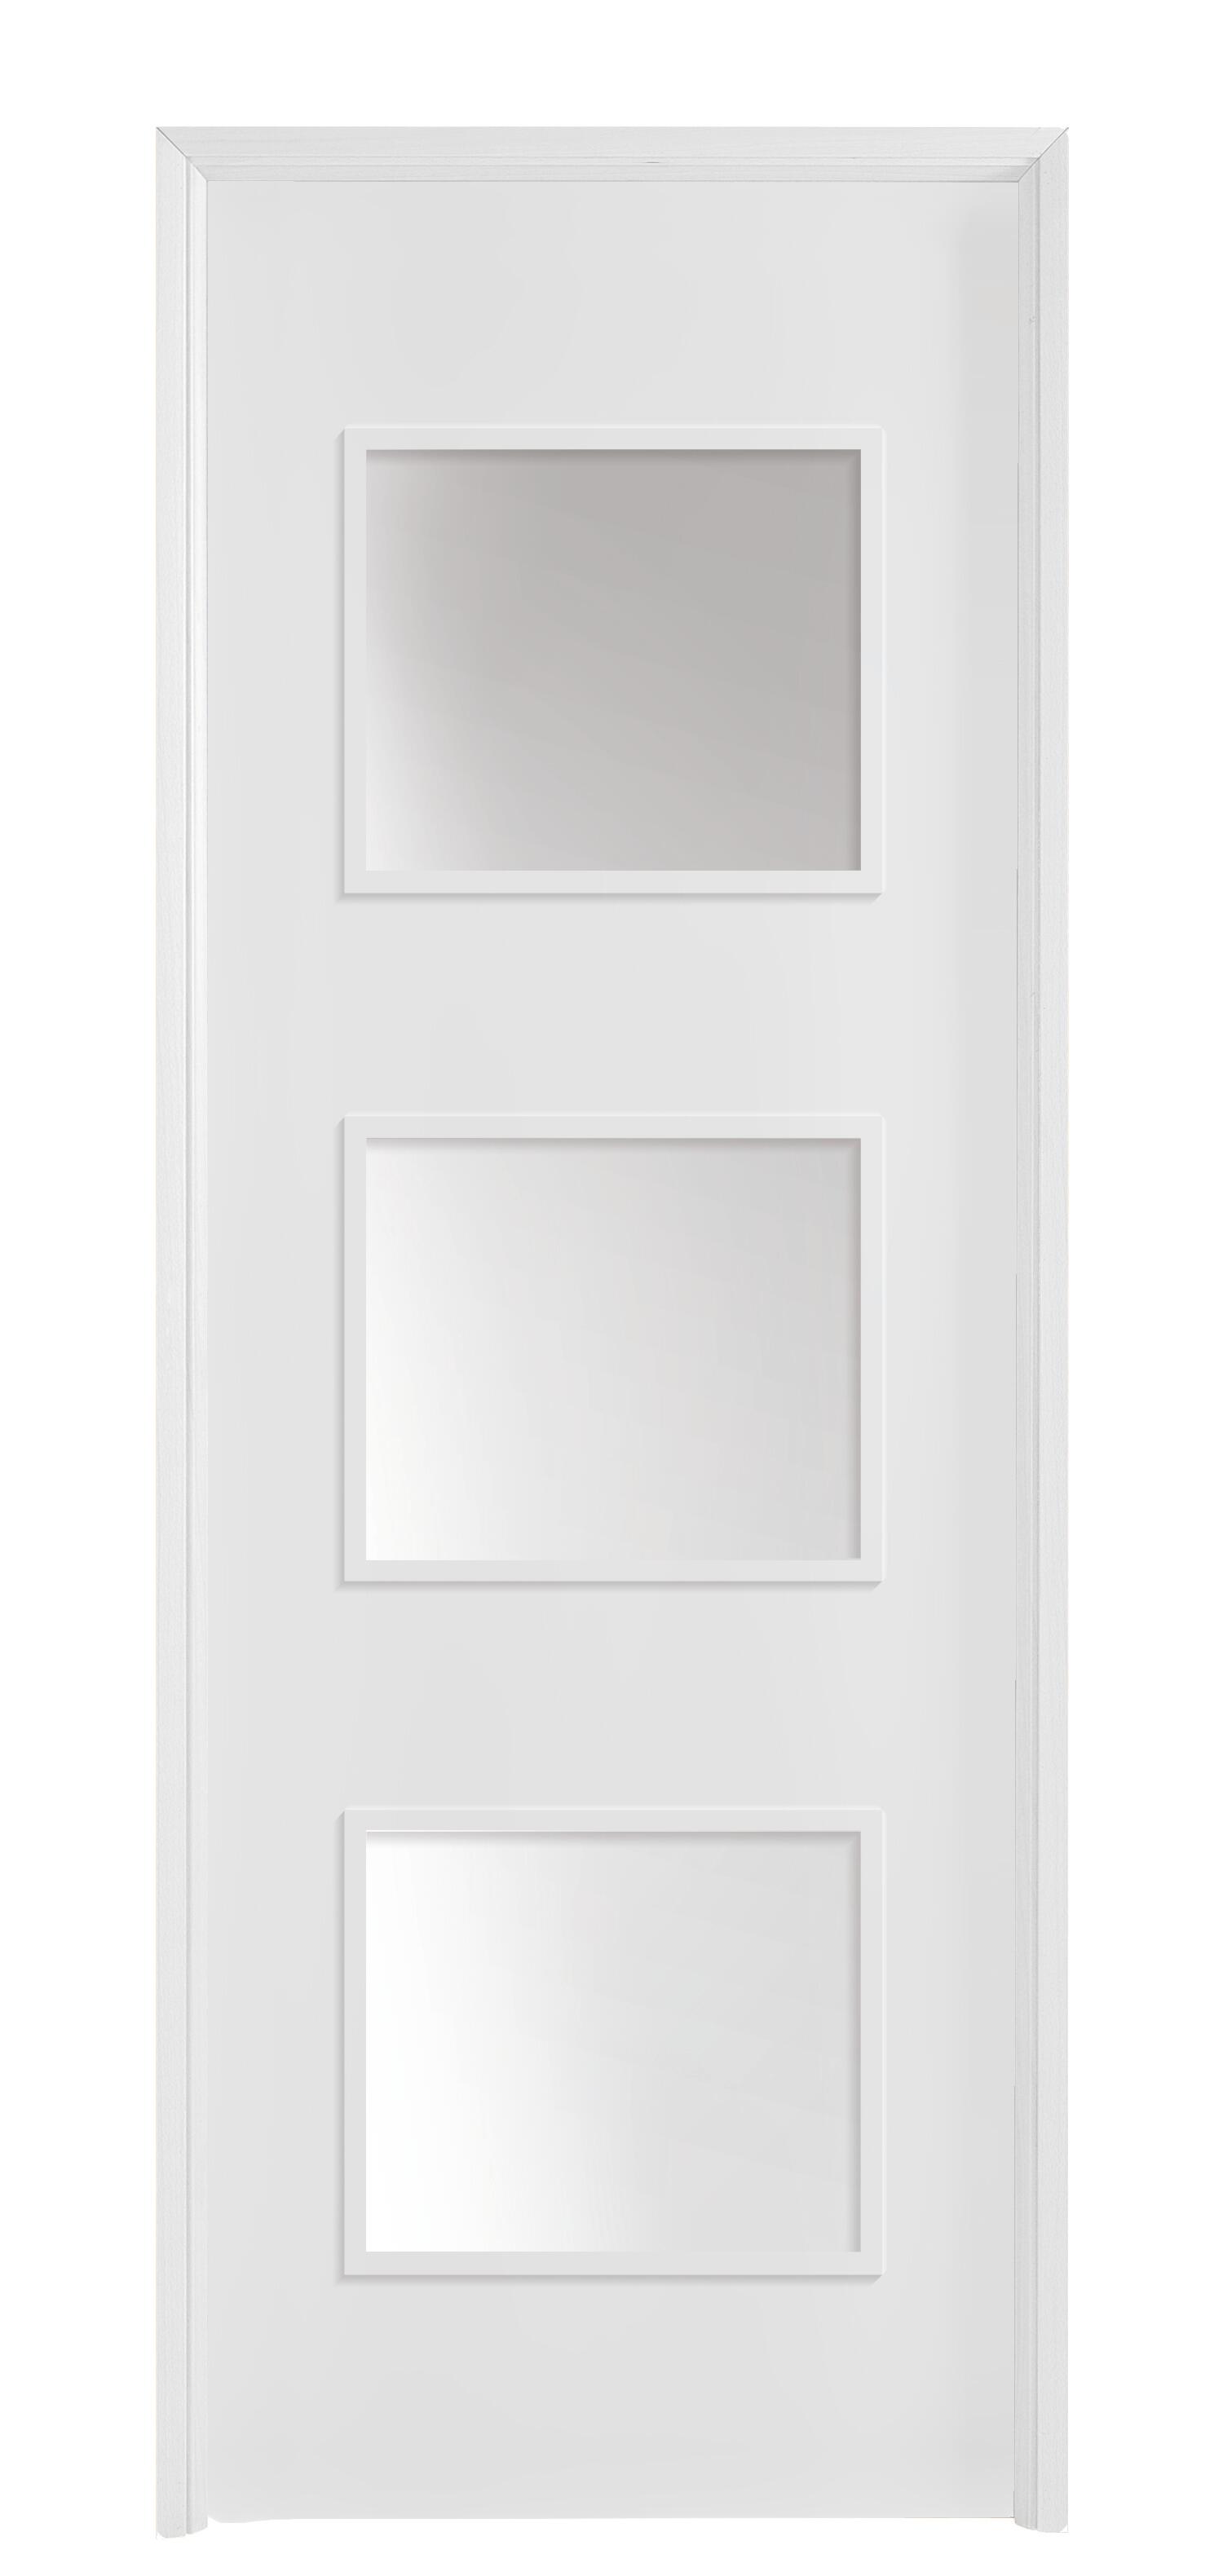 Puerta con cristal bari plus blanca 9x2x92,5 cm d